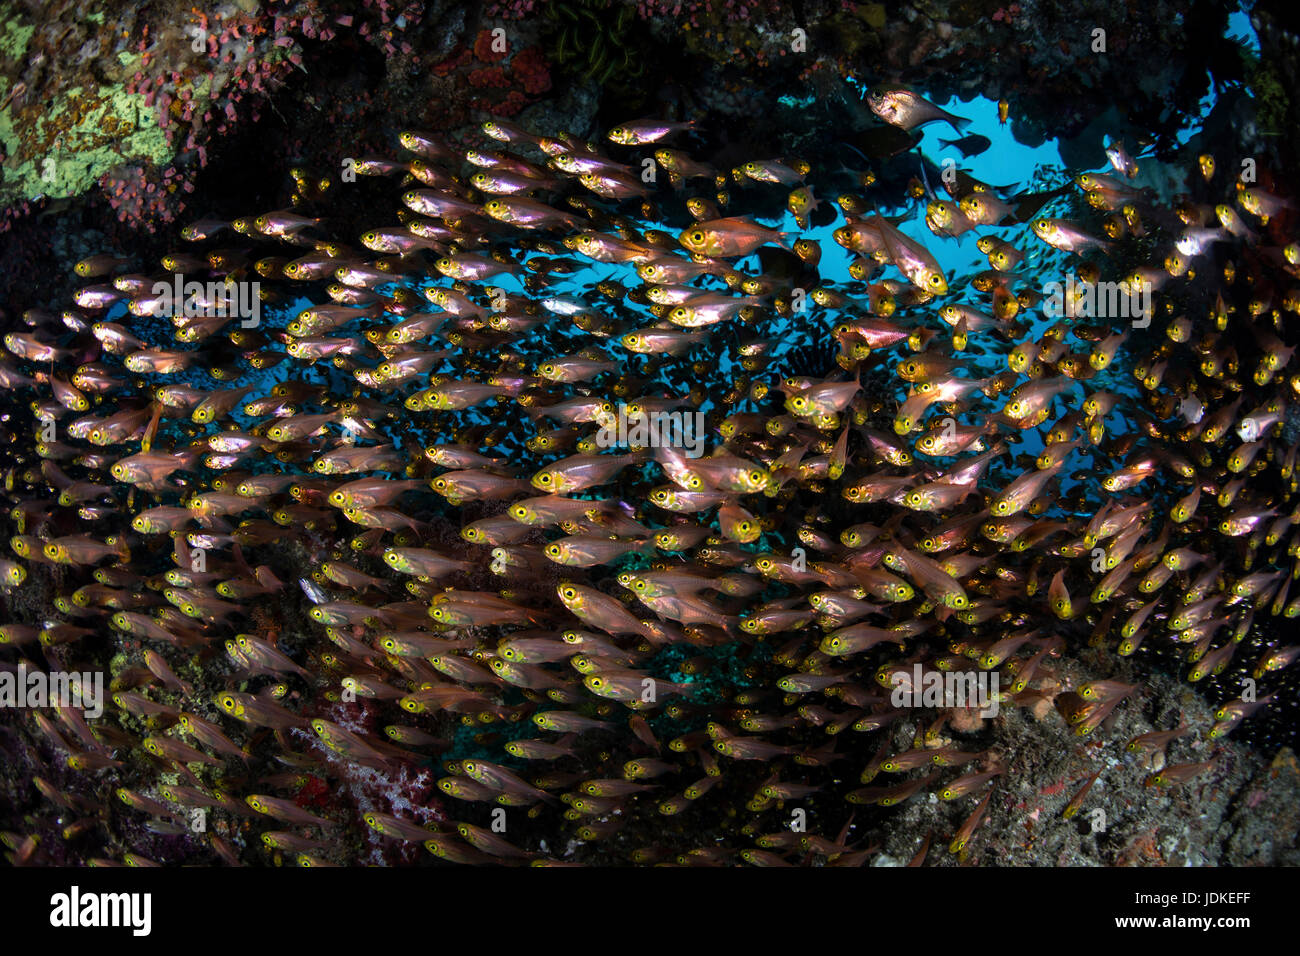 Golden Sweeper schooling around Corals, Parapriacanthus ransonneti, Raja Ampat, West Papua, Indonesia Stock Photo